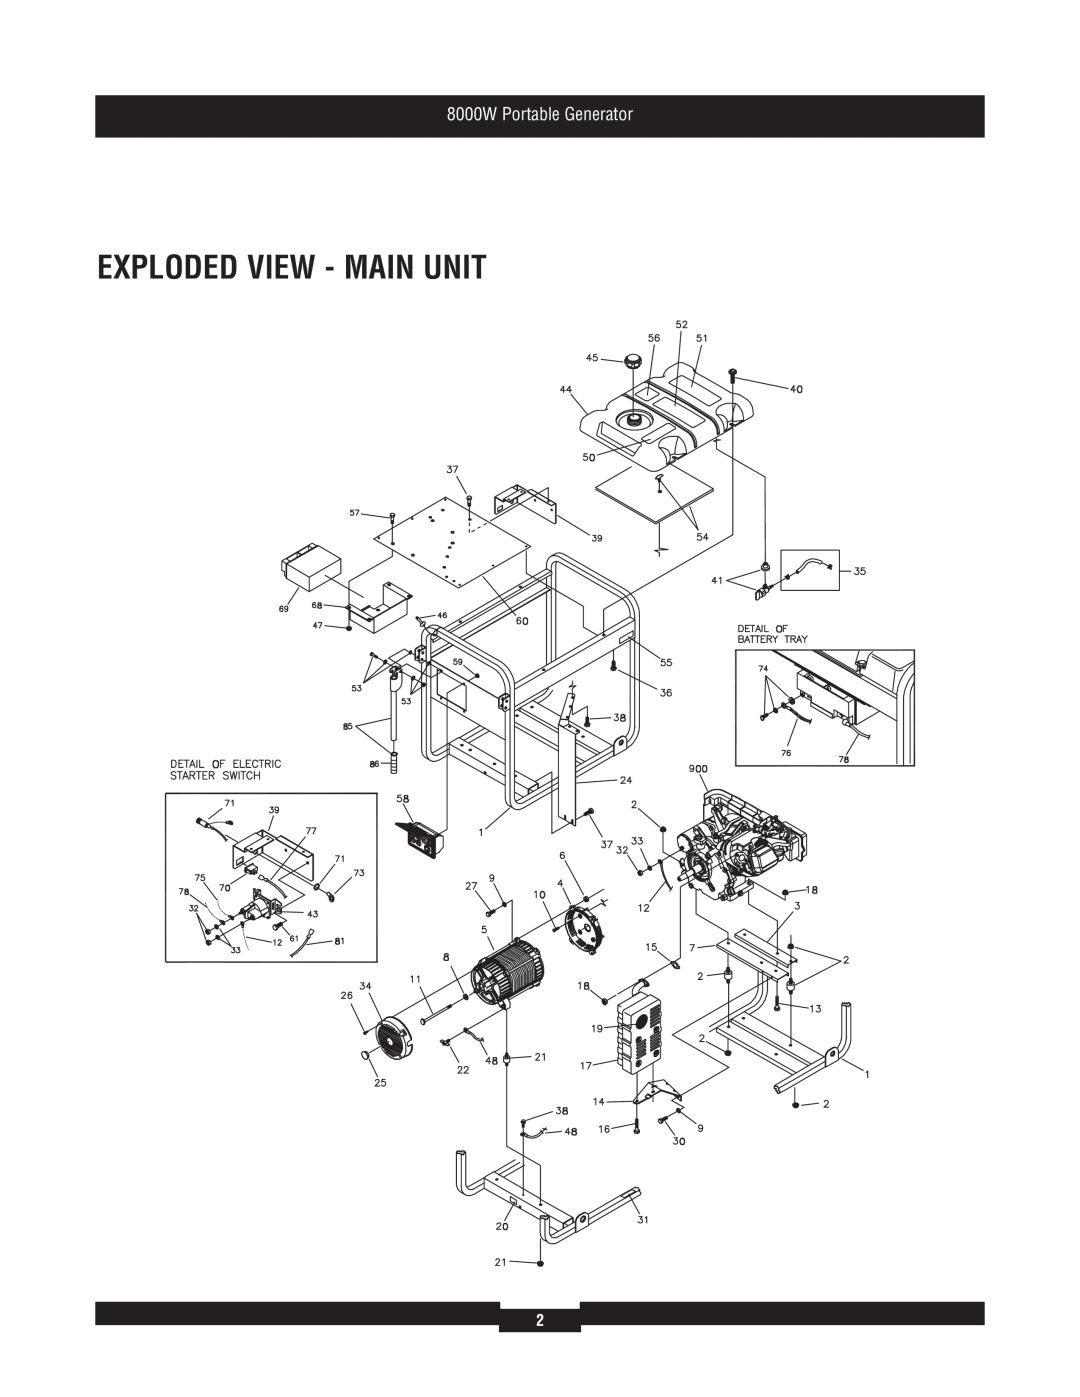 Briggs & Stratton 030385 manual Exploded View - Main Unit, 8000W Portable Generator 